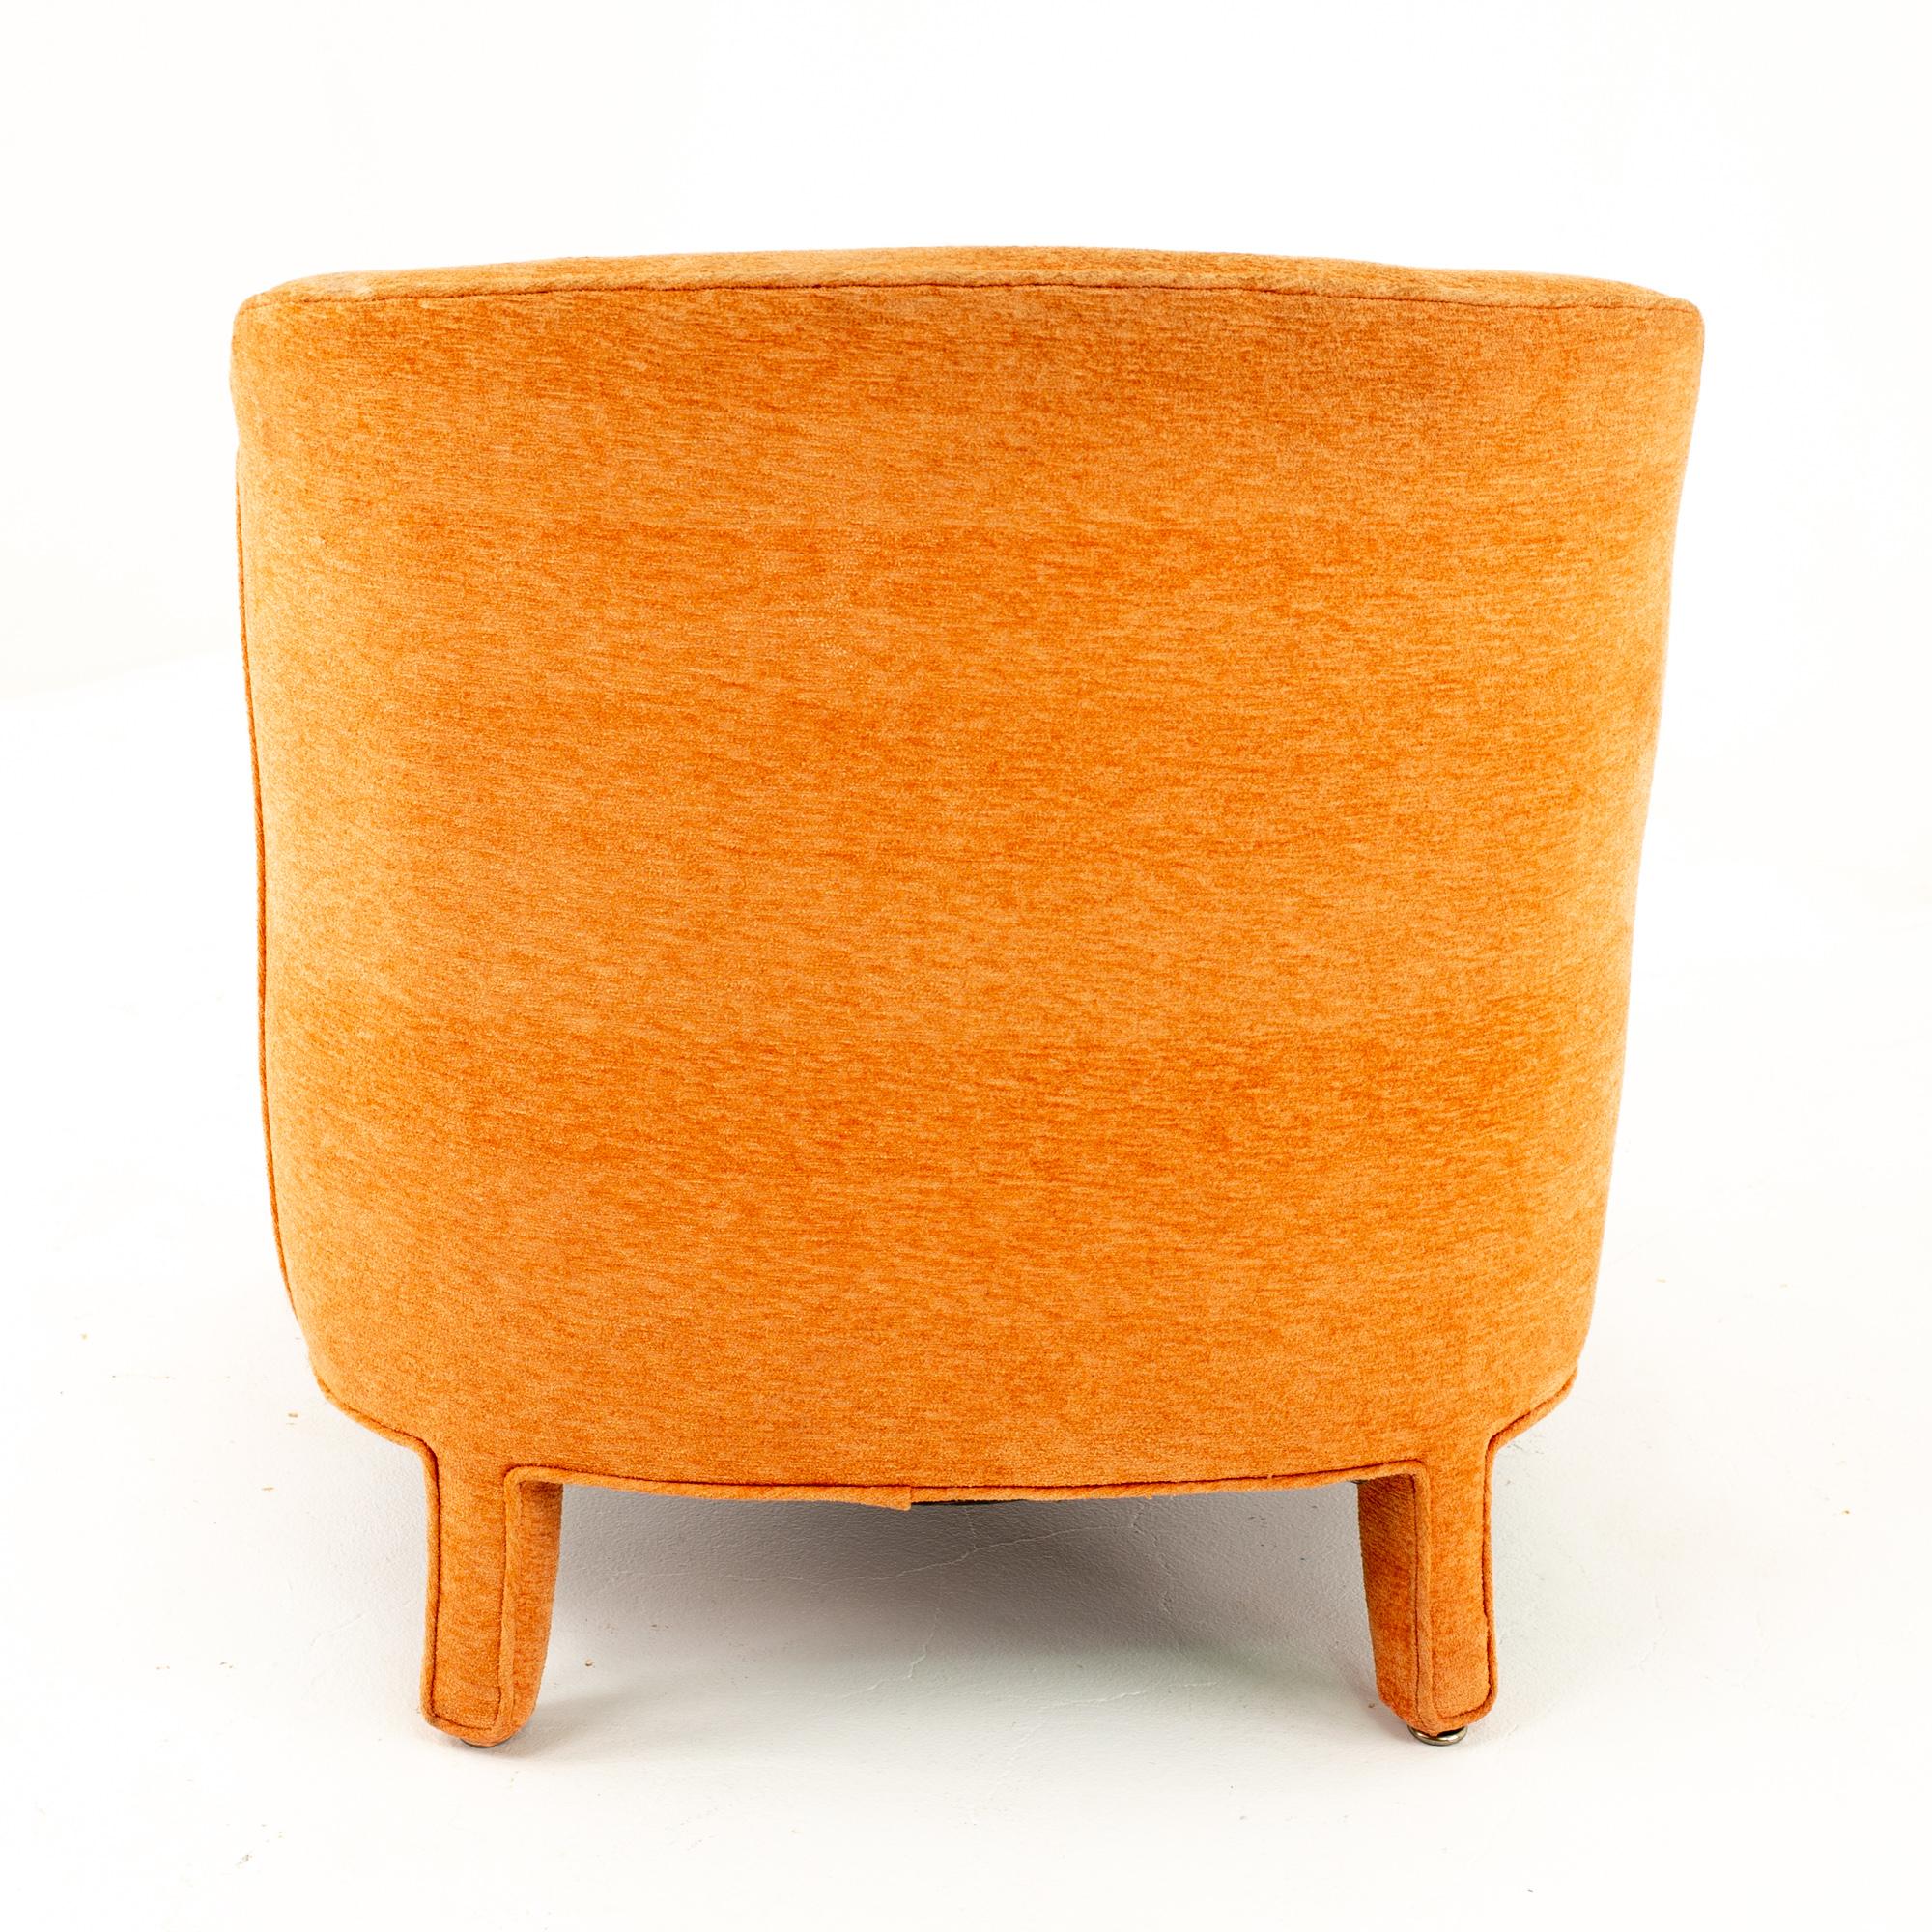 Edward Wormley for Dunbar Style Mid Century Barrel Chairs, Pair 1